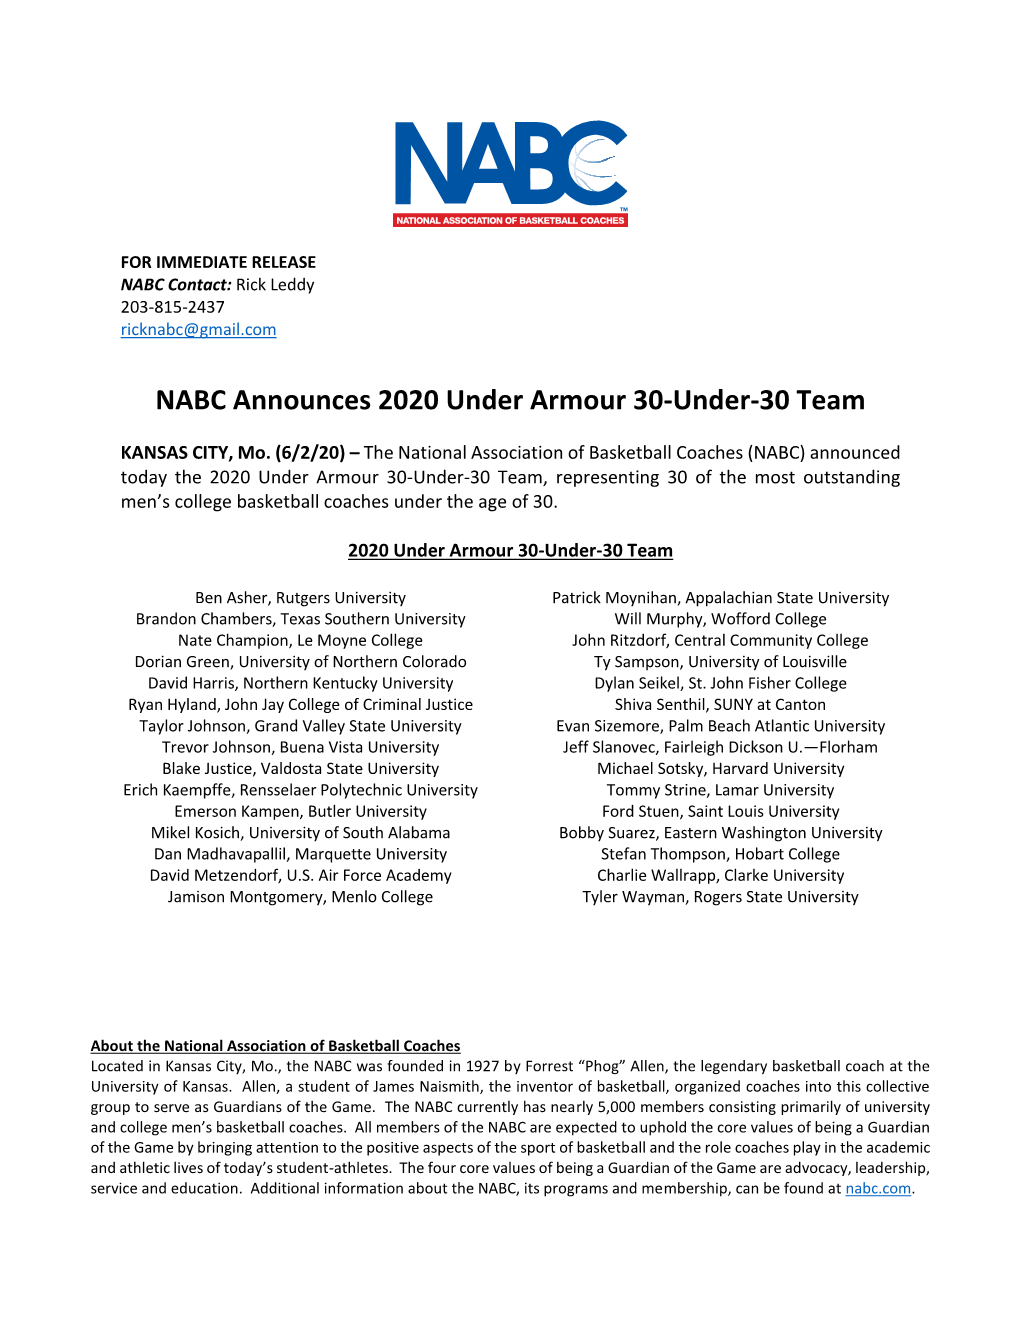 NABC Announces 2020 Under Armour 30-Under-30 Team